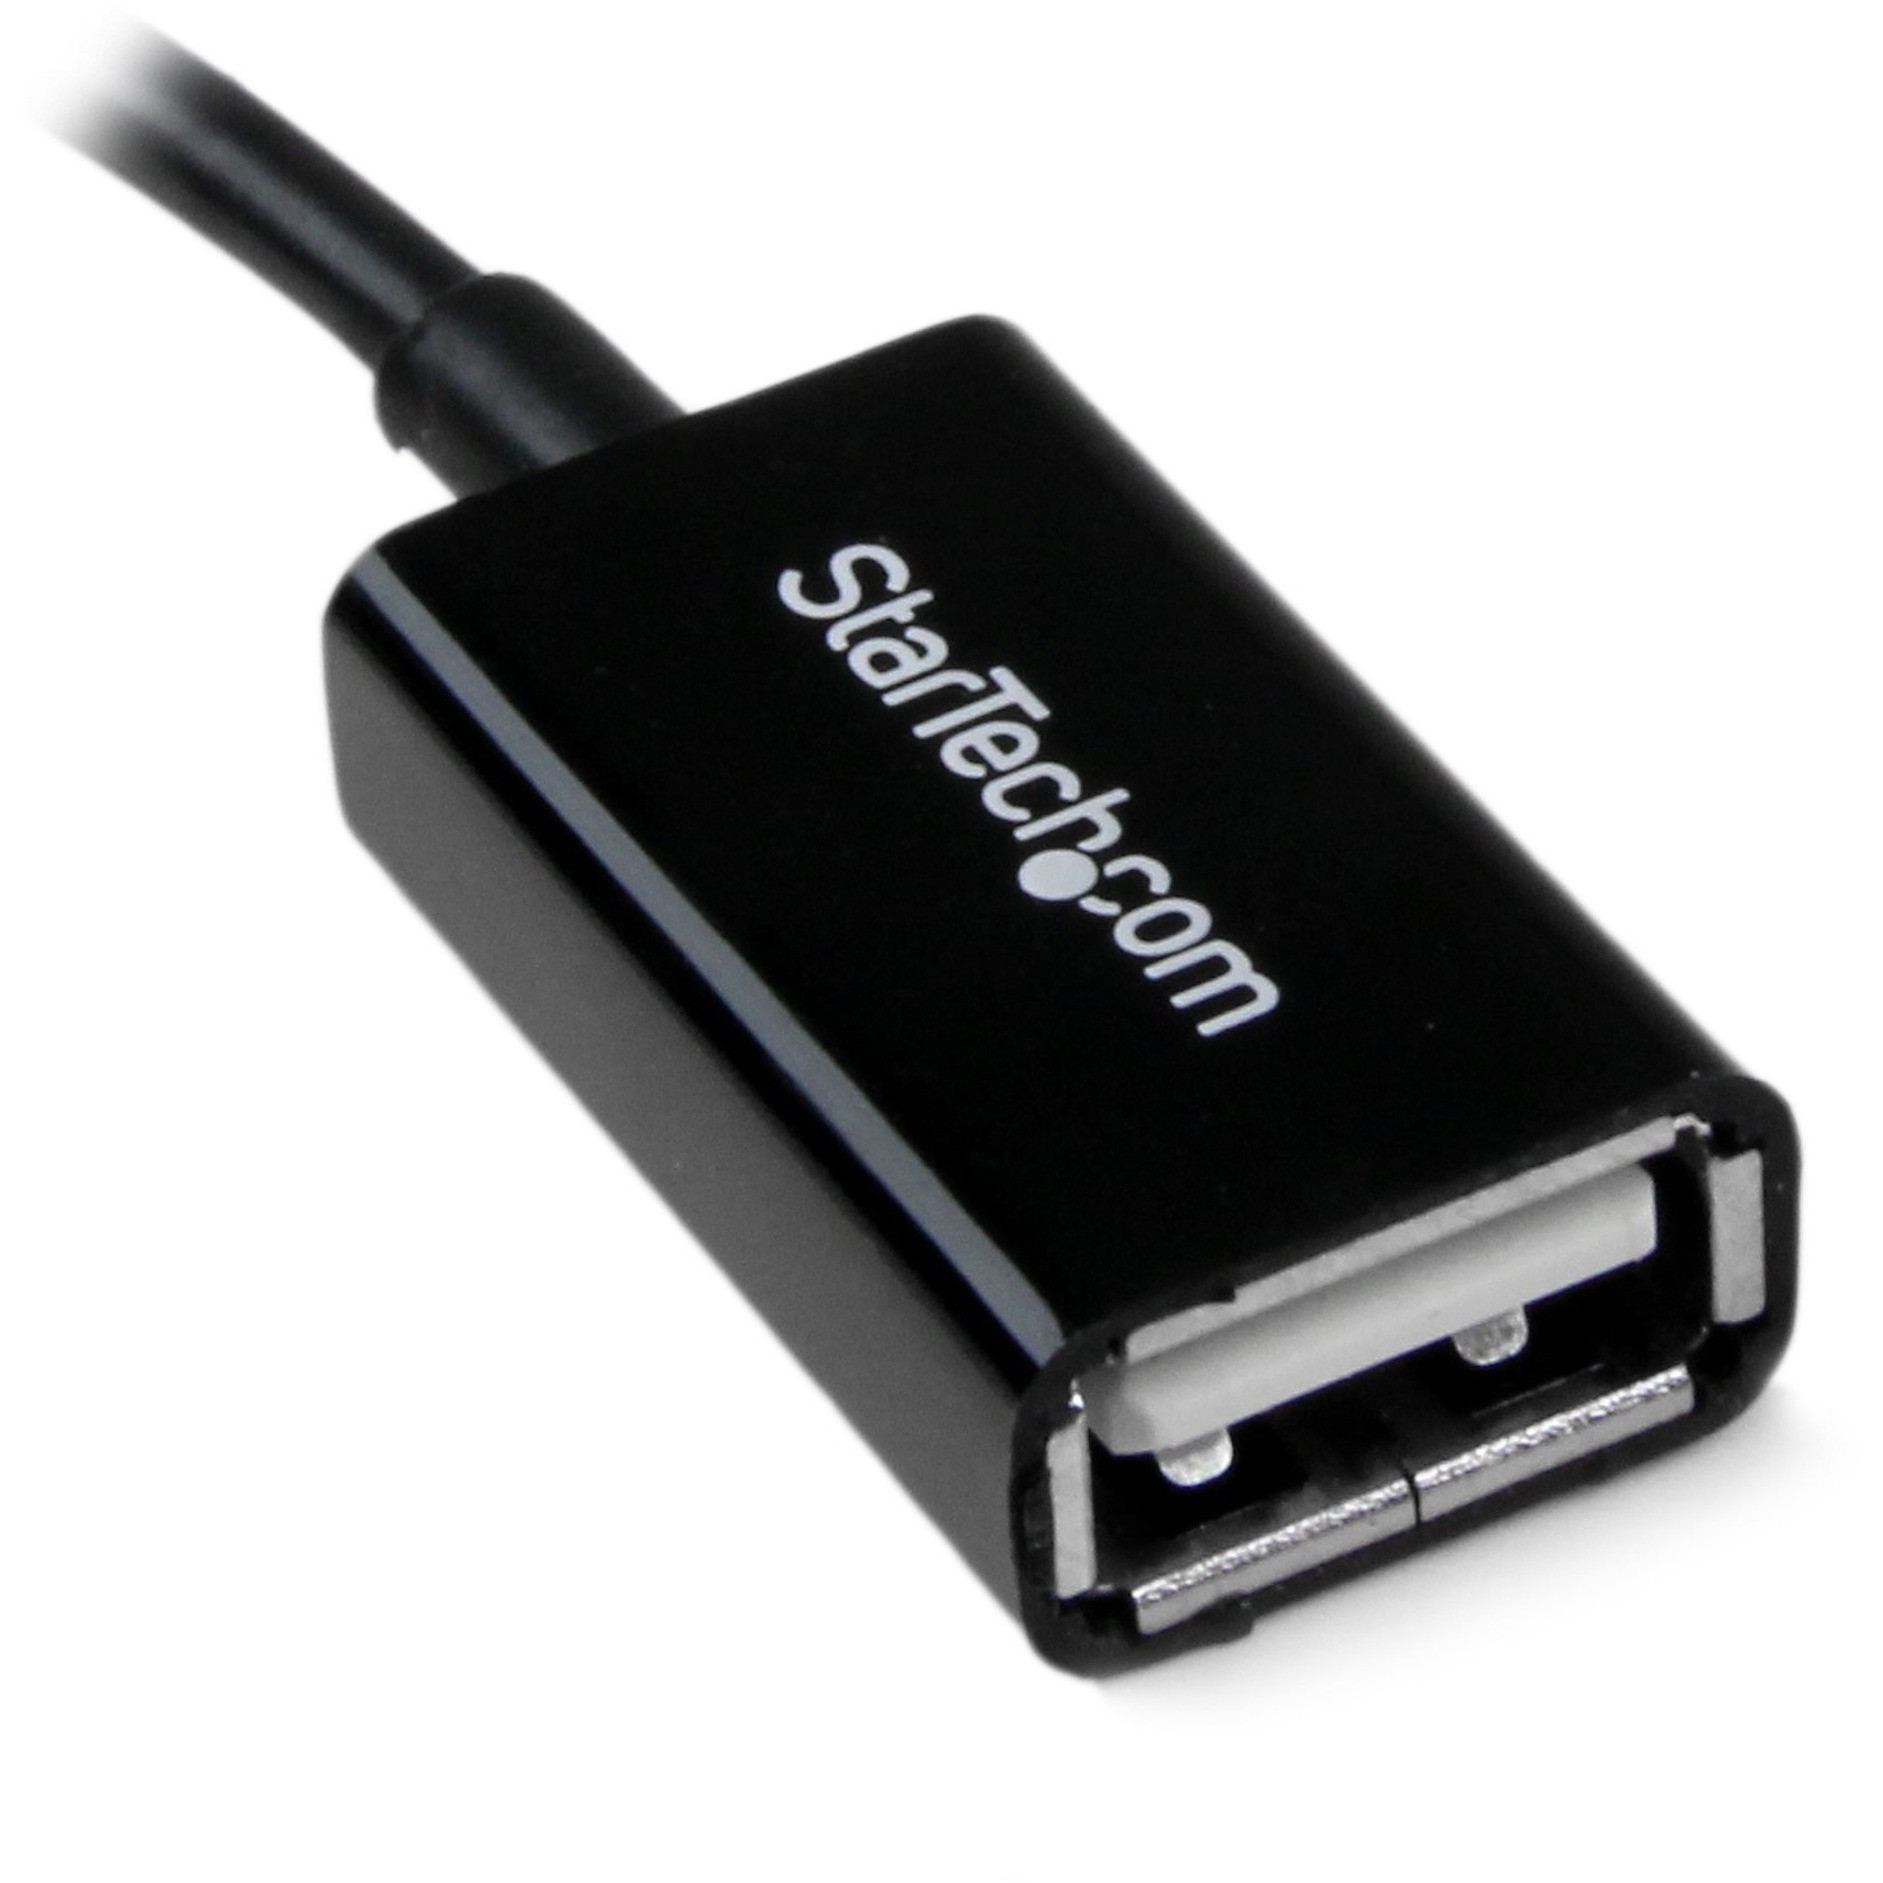 Переходник OTG Micro-USB. OTG переходник Micro USB черный. USB хост (OTG). STARTECH UUSBOTGW / MICROUSB. Host adapter